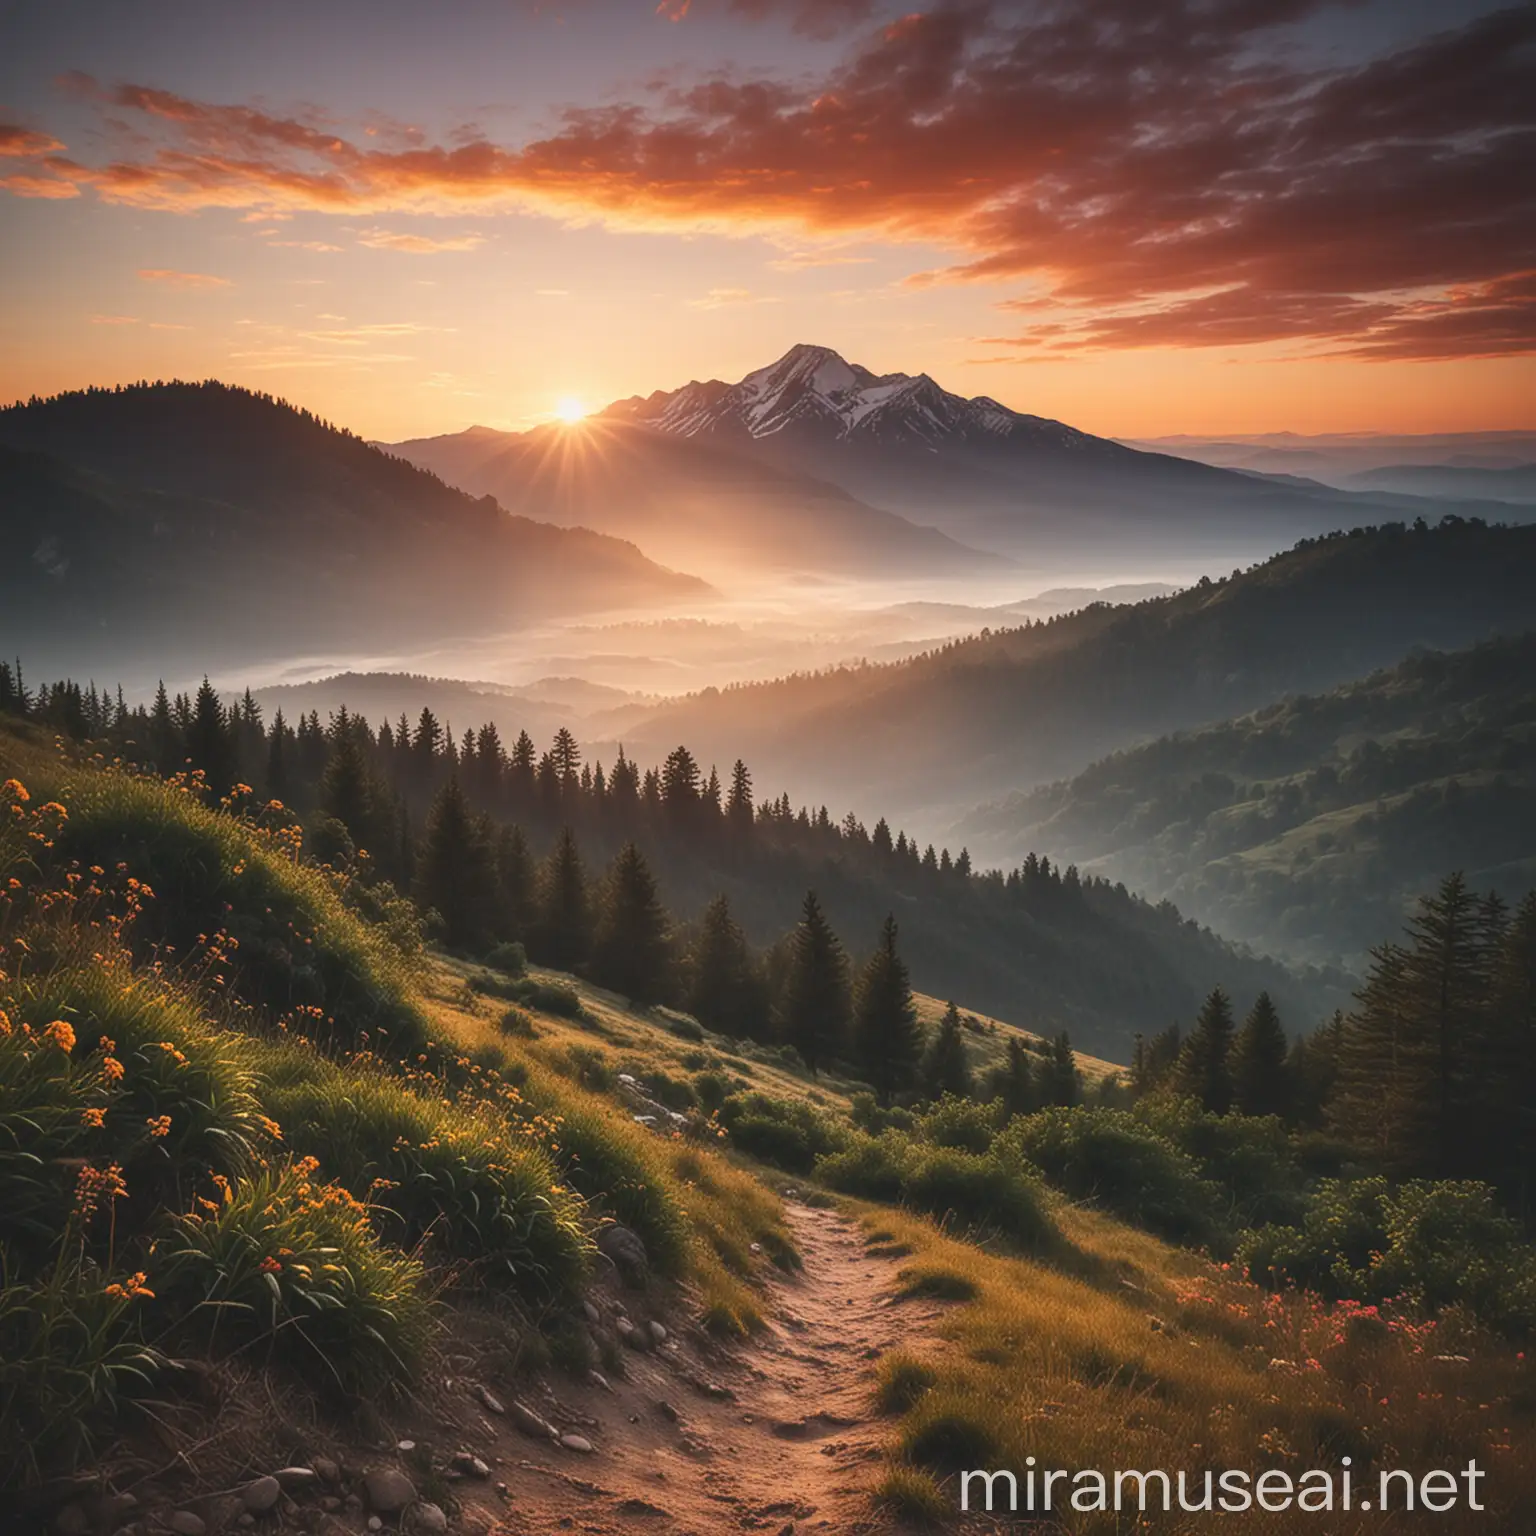 Peaceful sunrise scene over mountain 